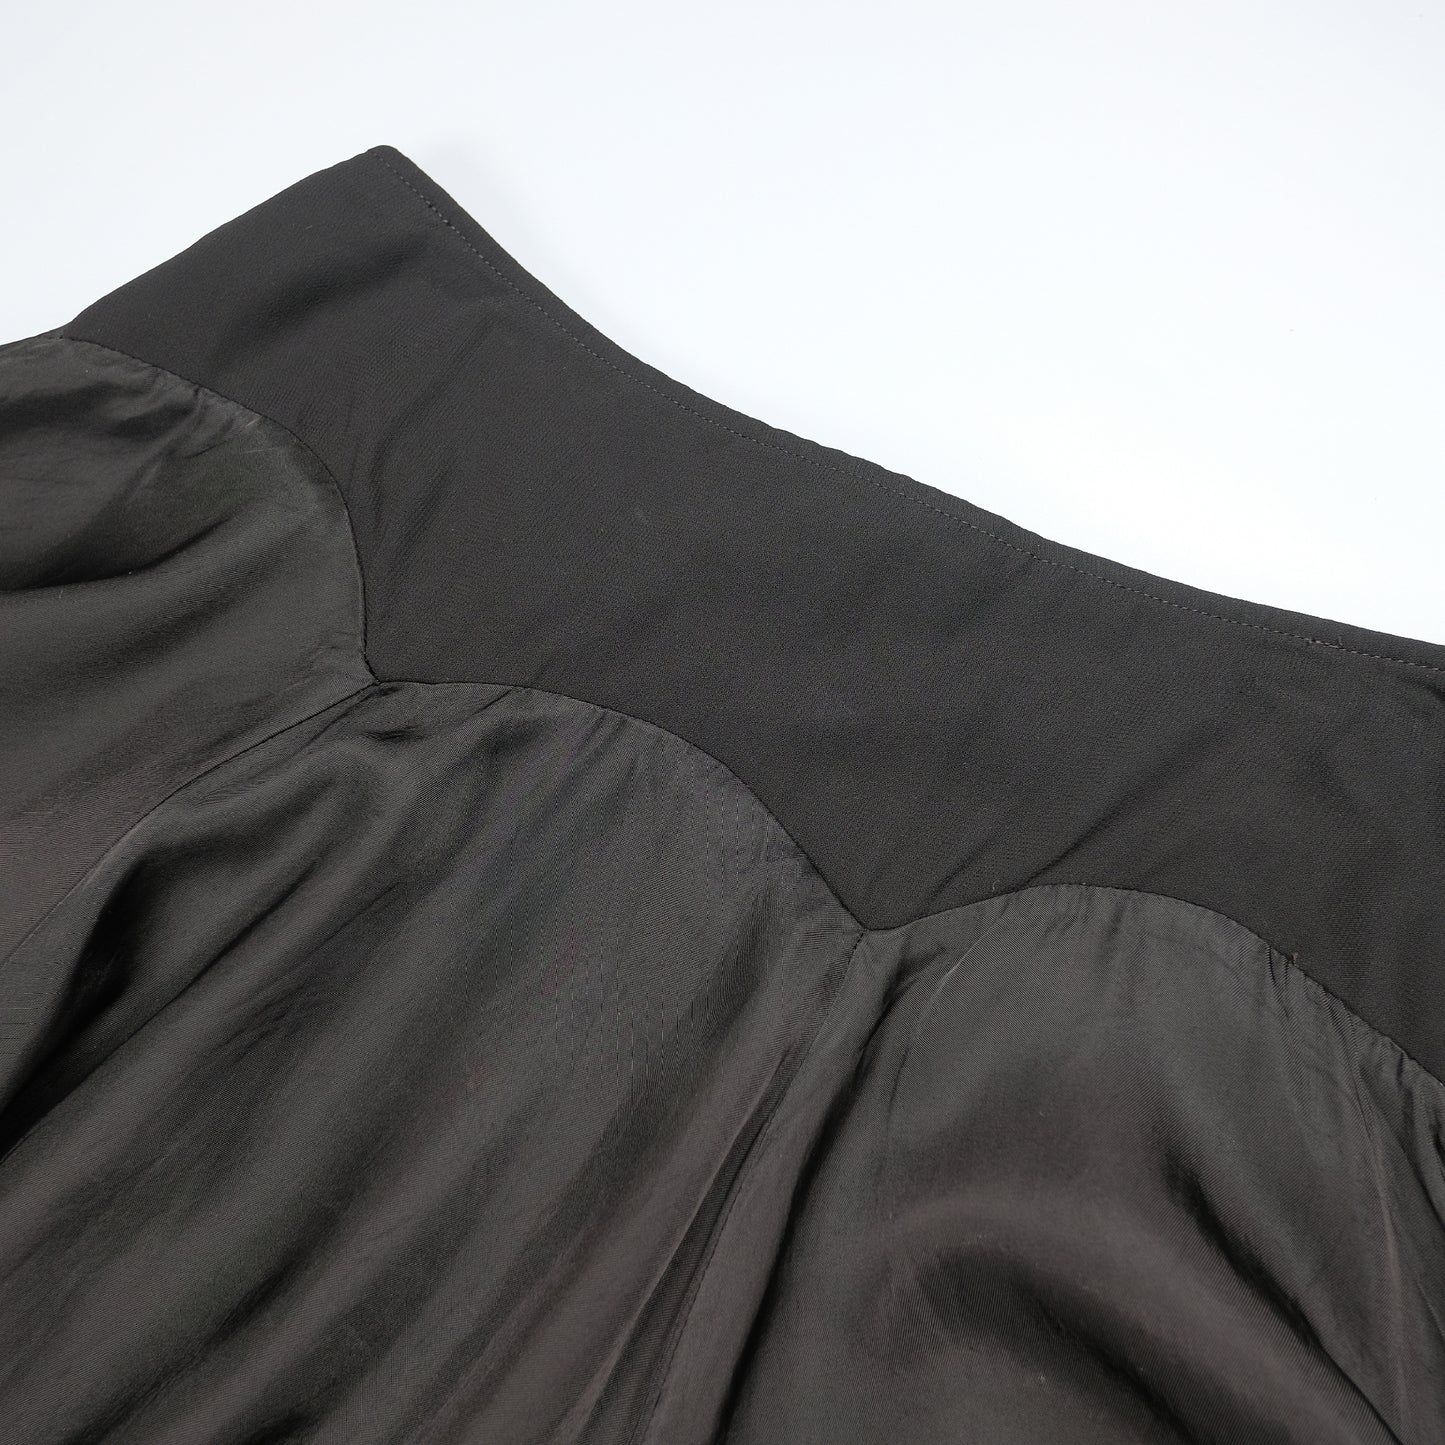 CDG Tricot Black Flared Skirt - AD2014